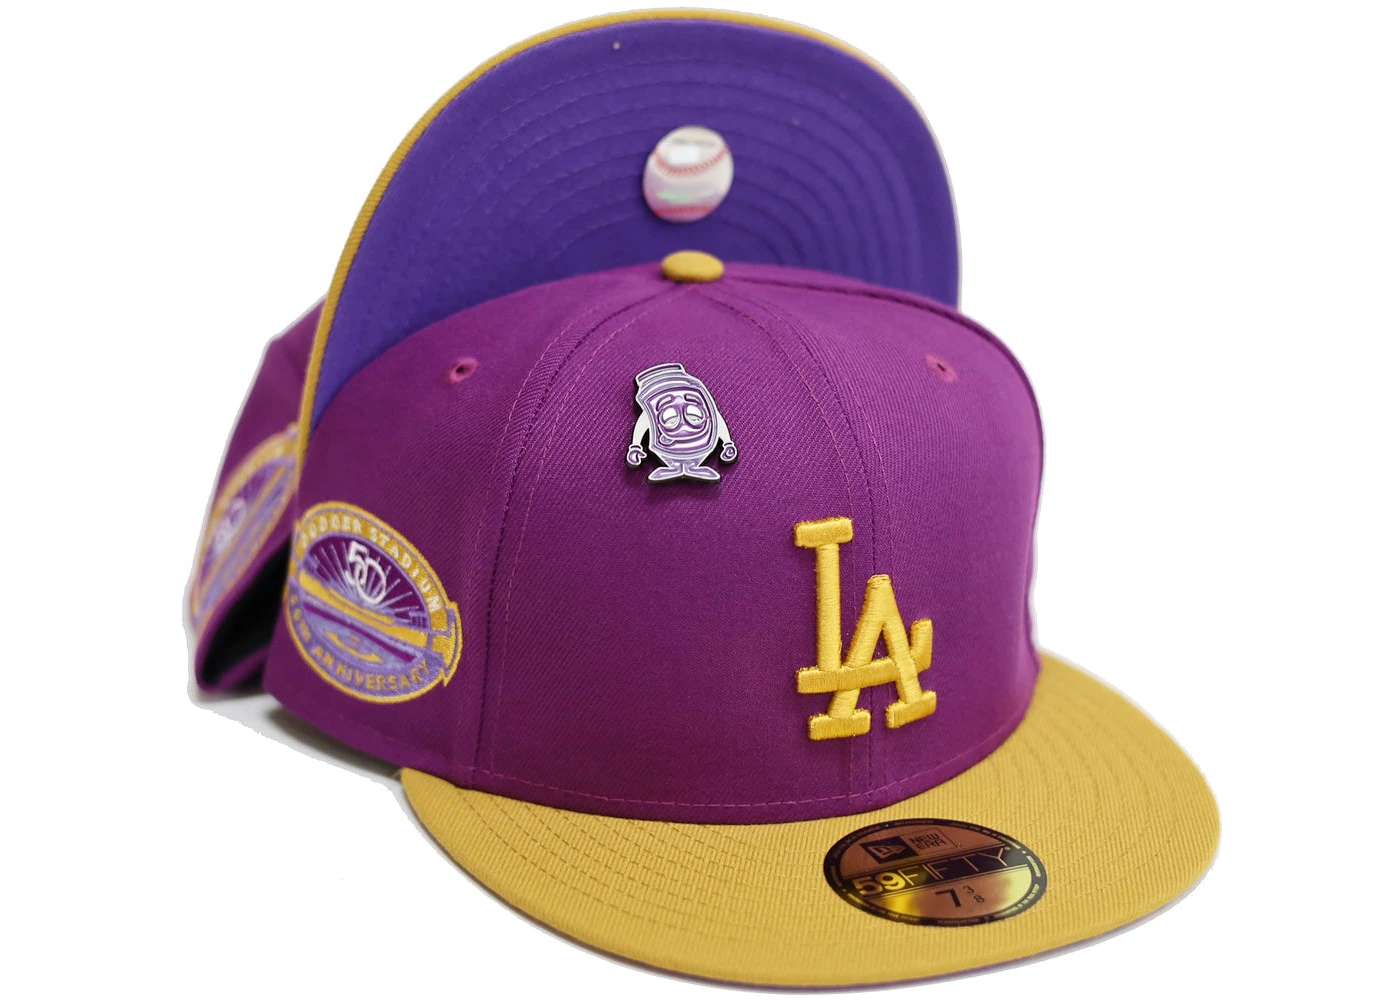 New Era On Field Alternate 59/Fifty Fitted Hat, Purple